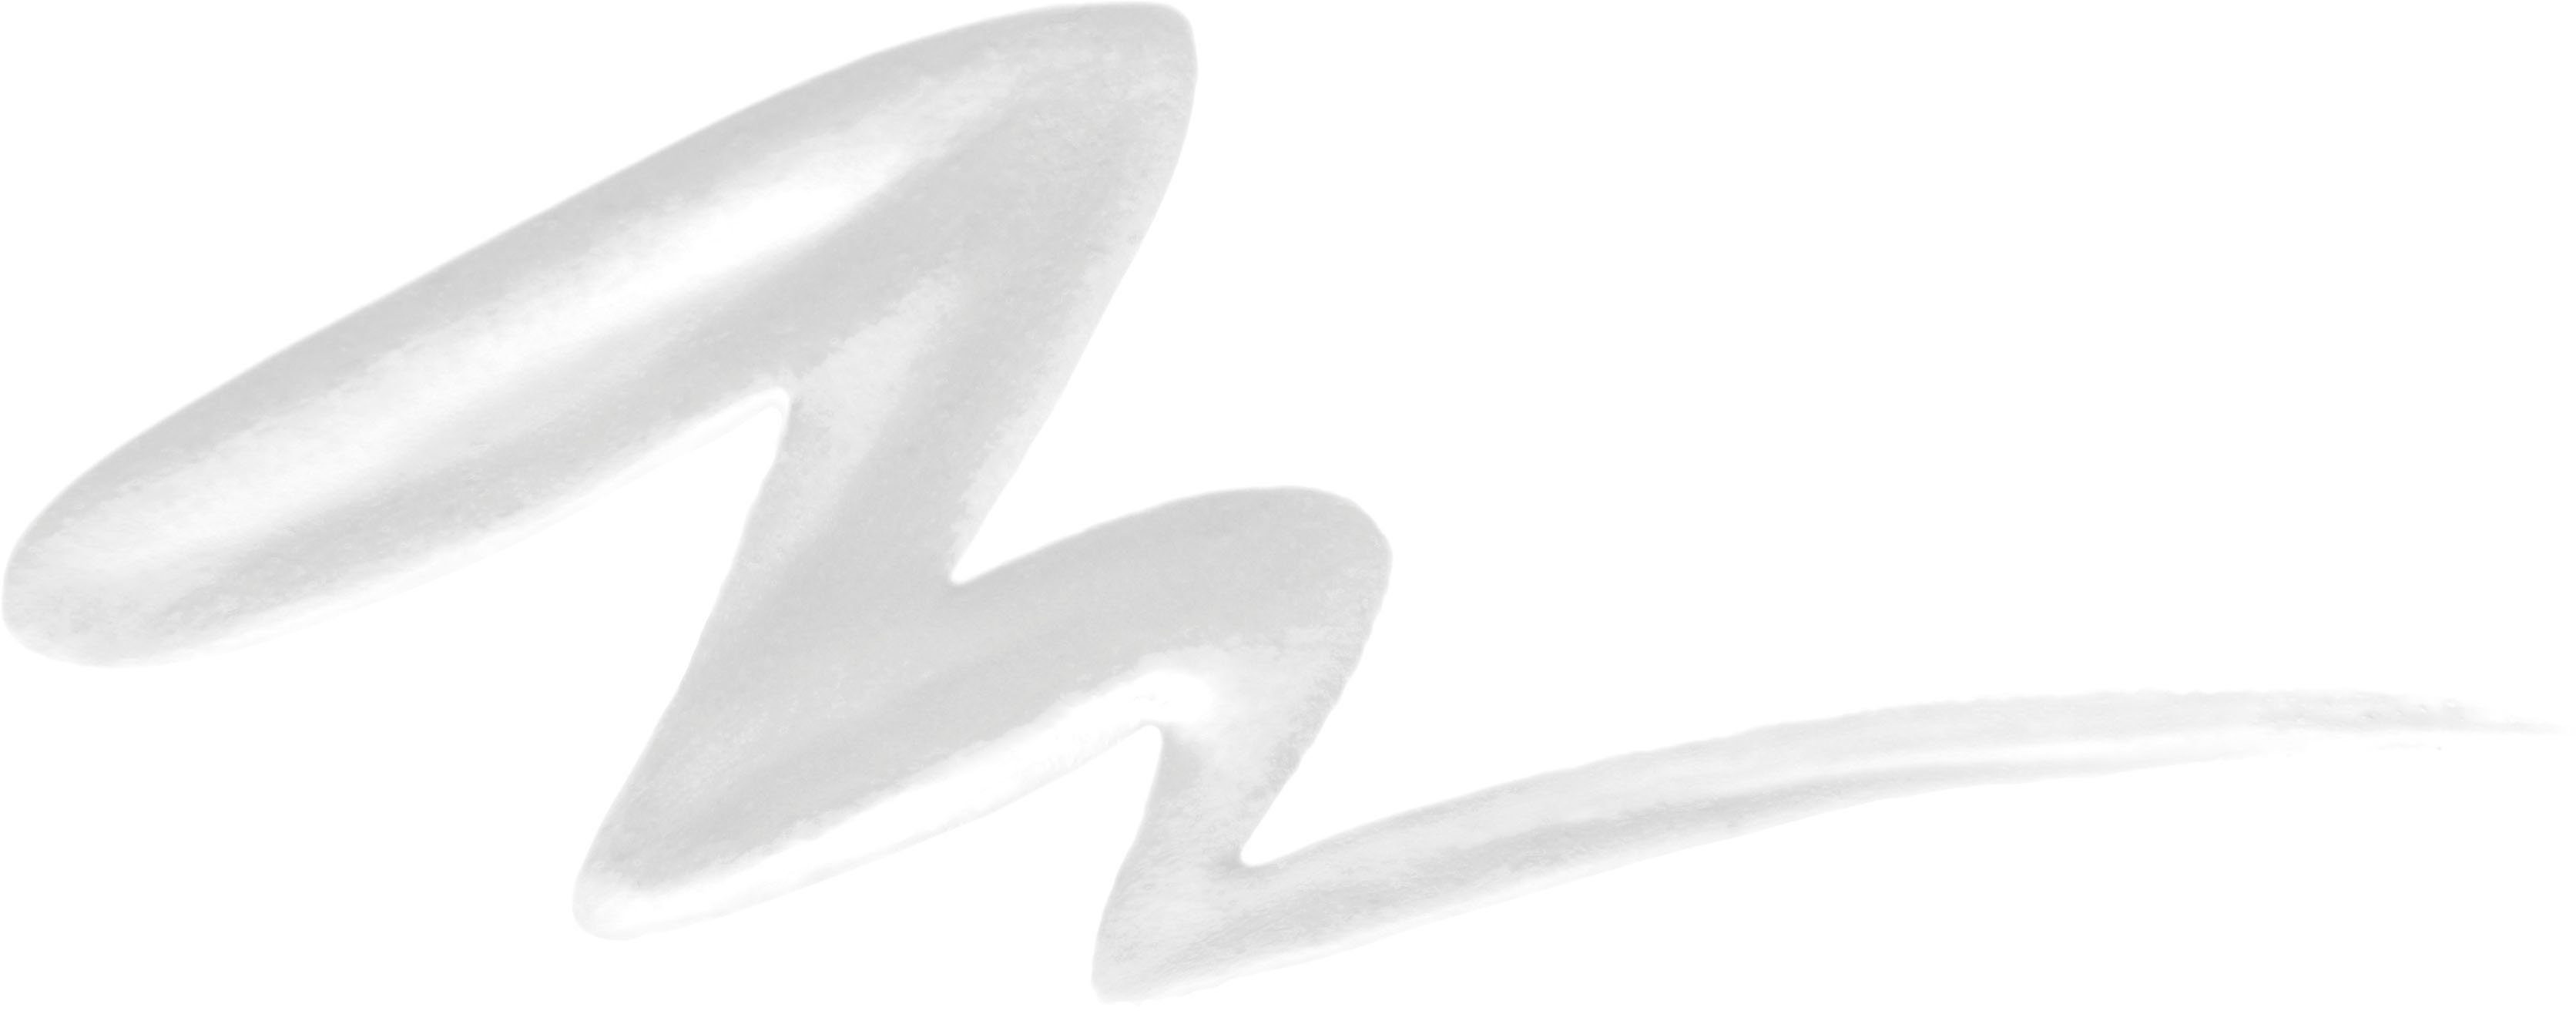 NYX Eyeliner White Wear Makeup Liquid Epic Professional Liner, 04 Waterproof